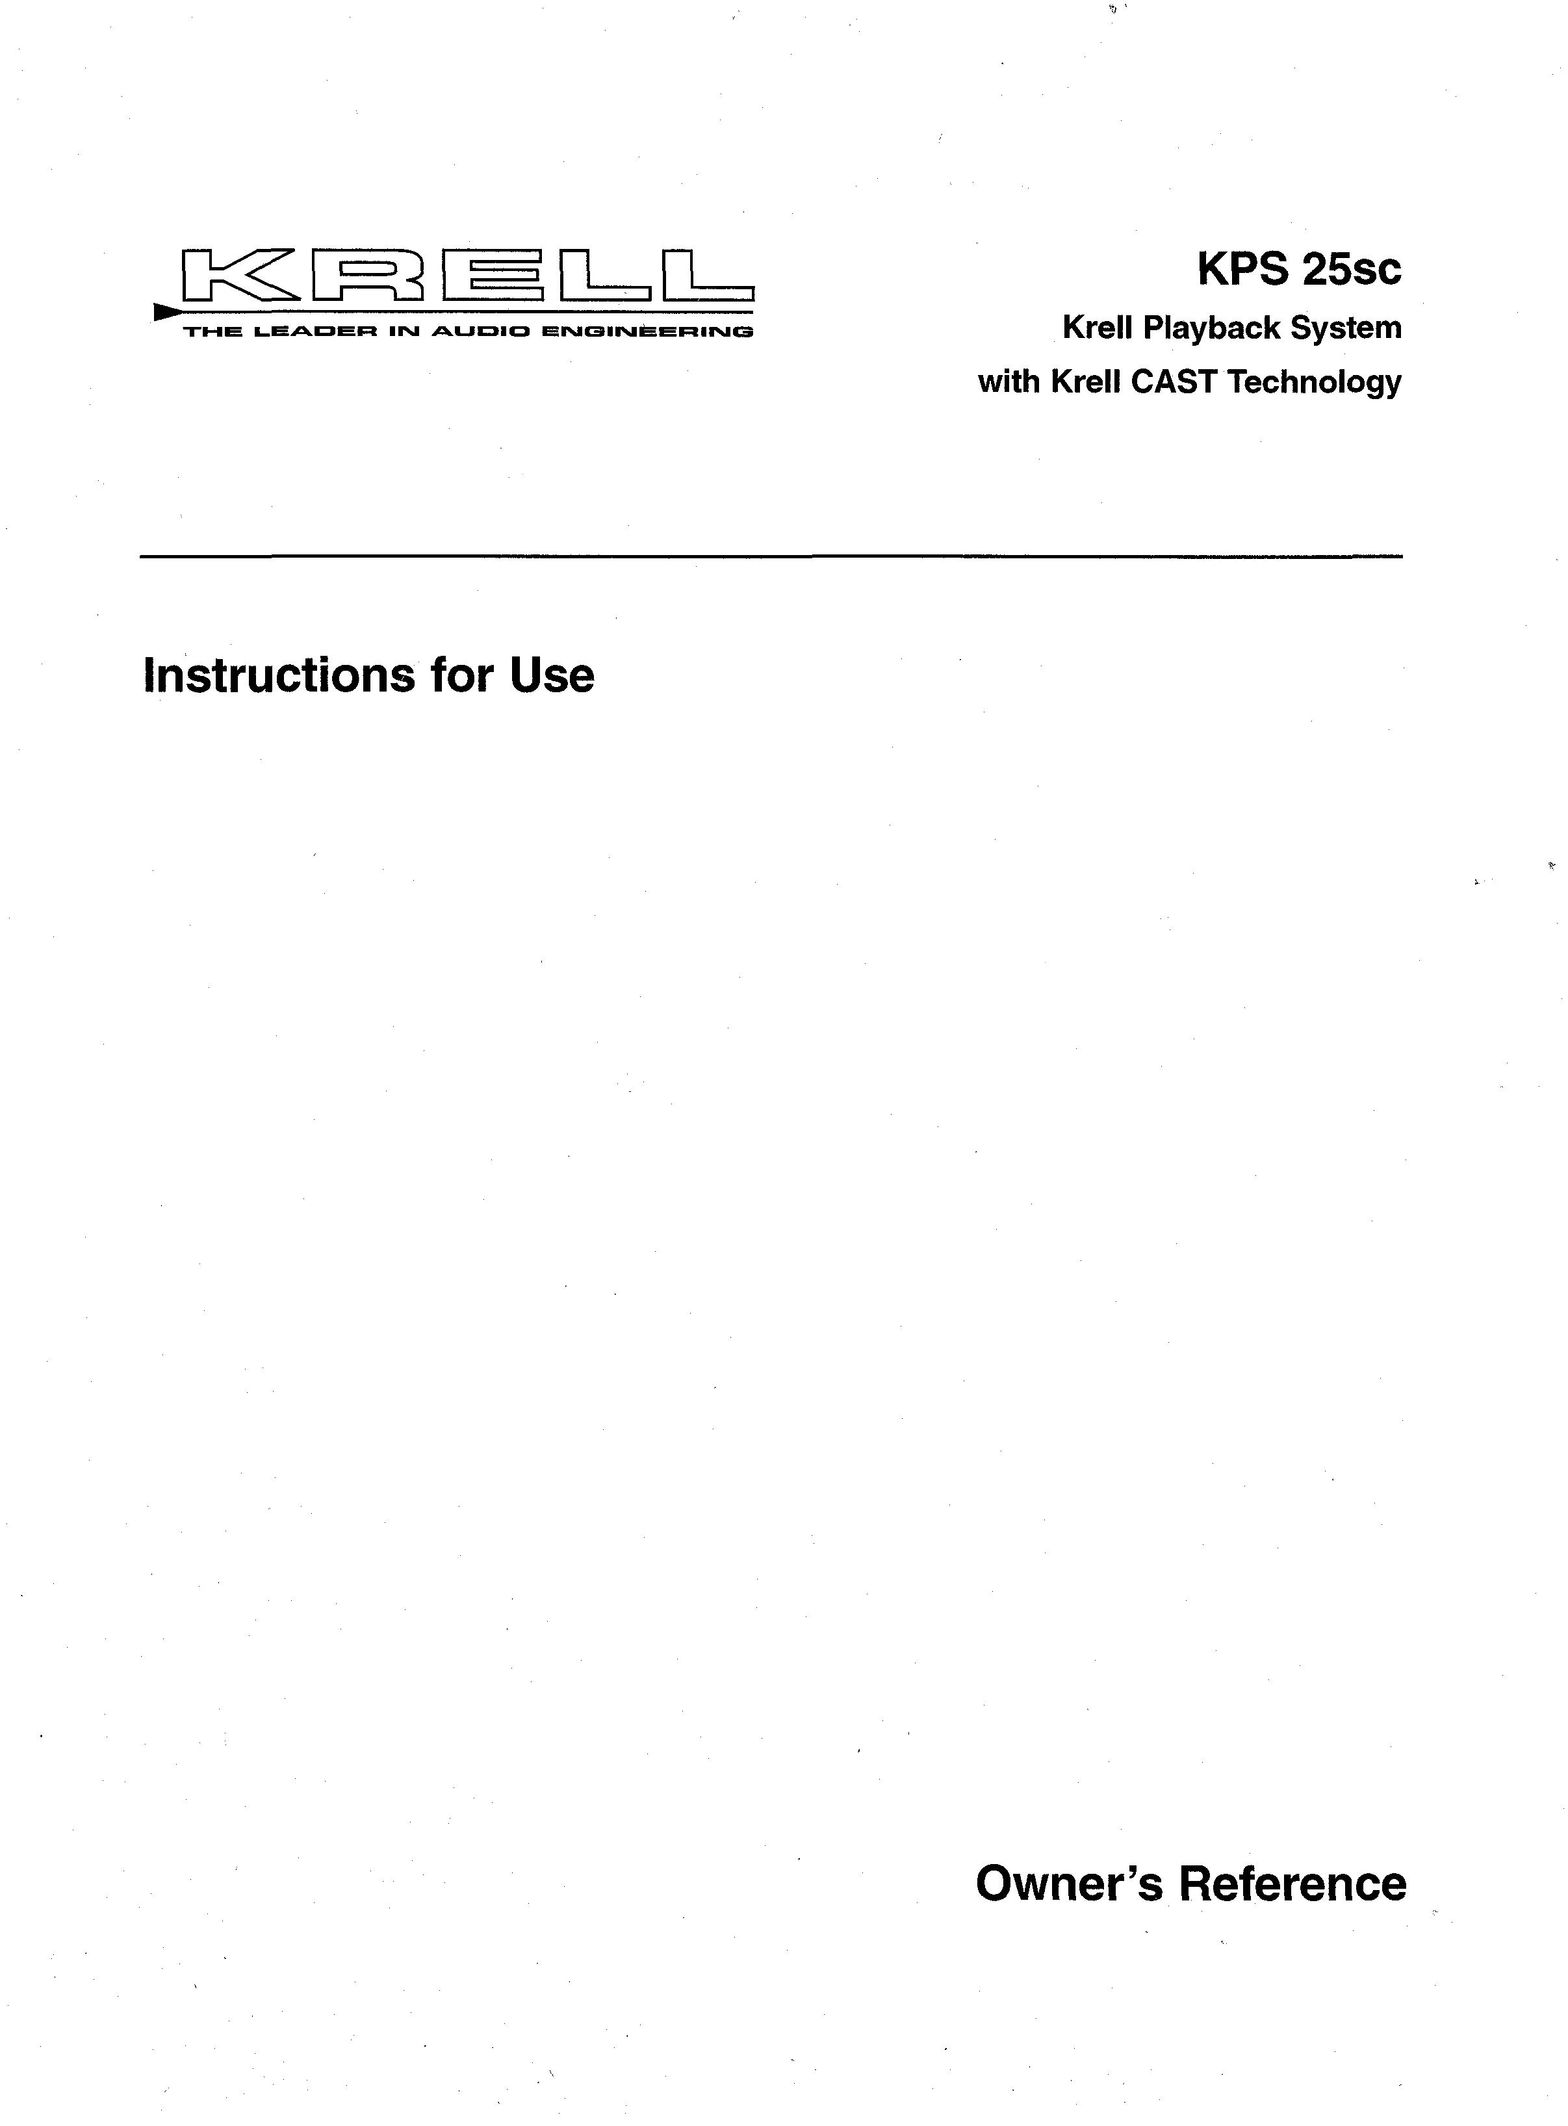 Krell Industries KPS 25sc CD Player User Manual